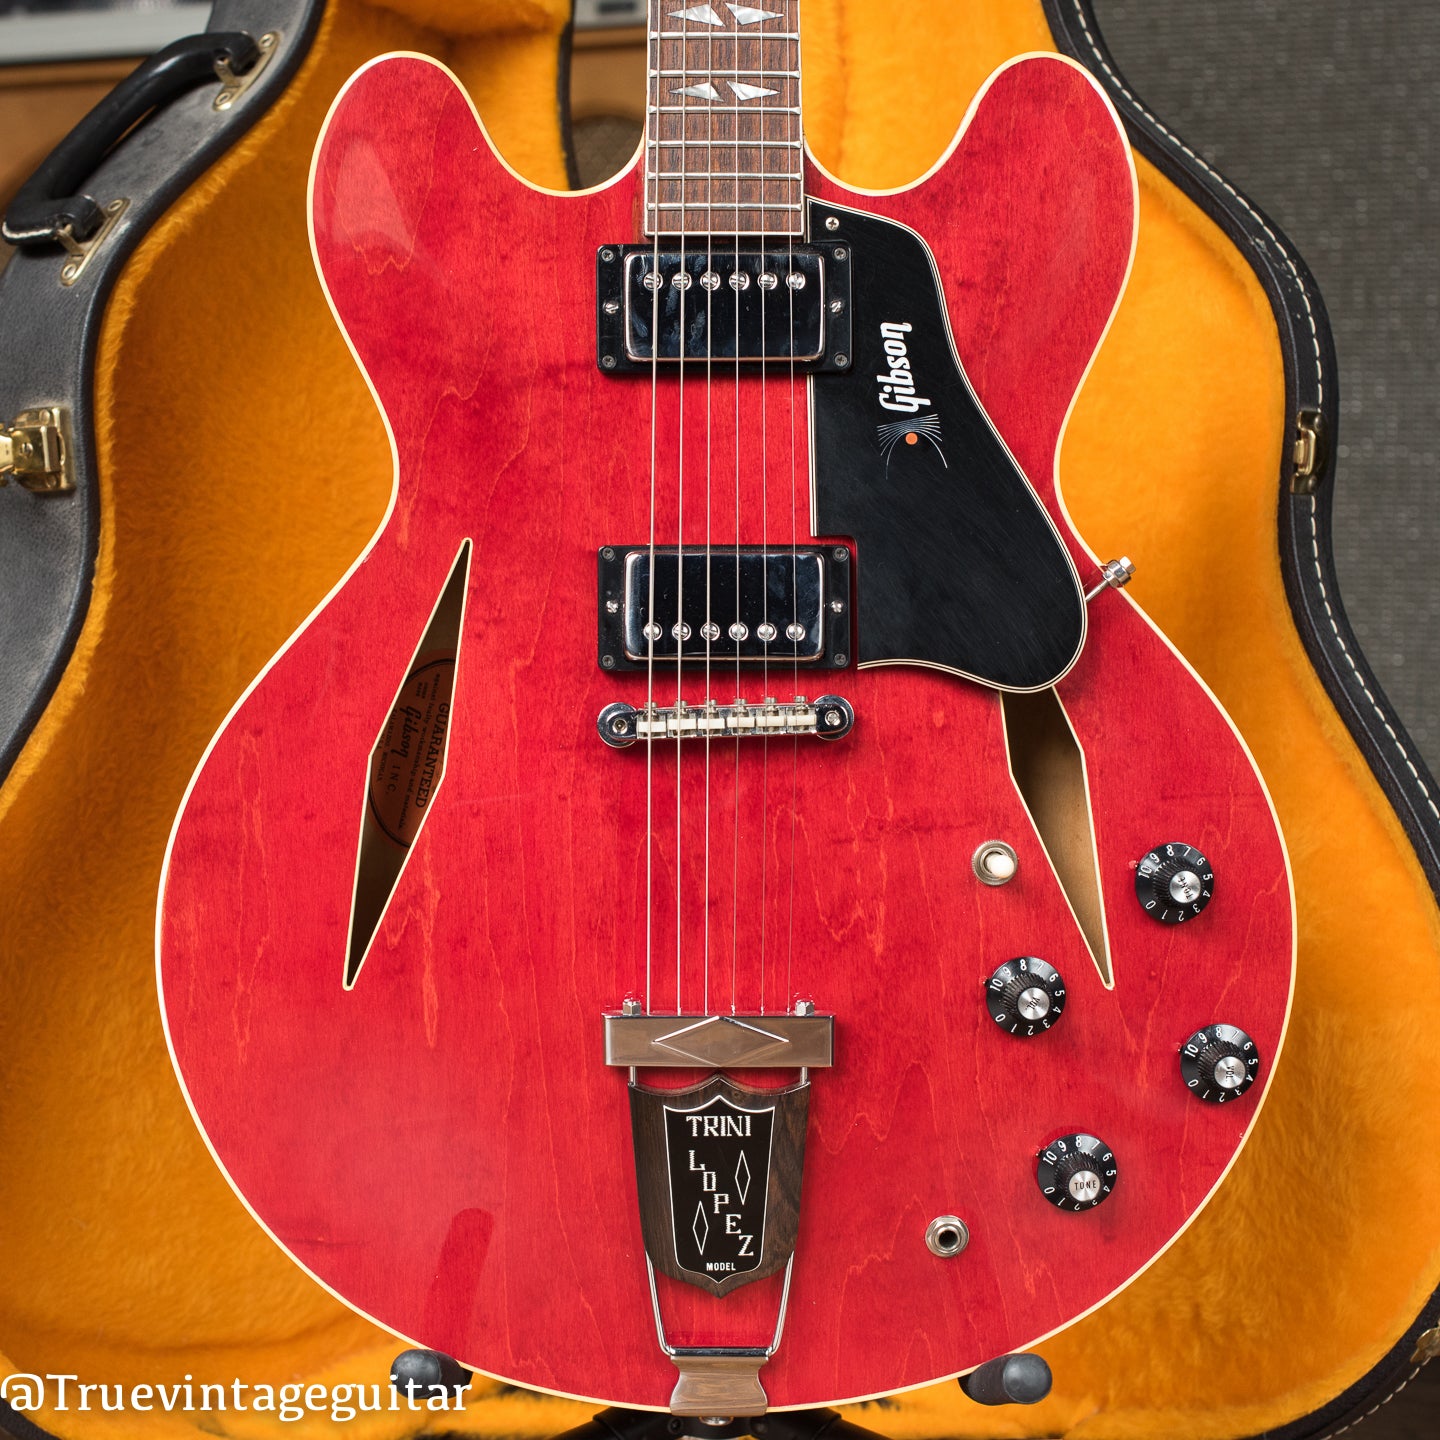 1968 Gibson Trini Lopez Standard guitar